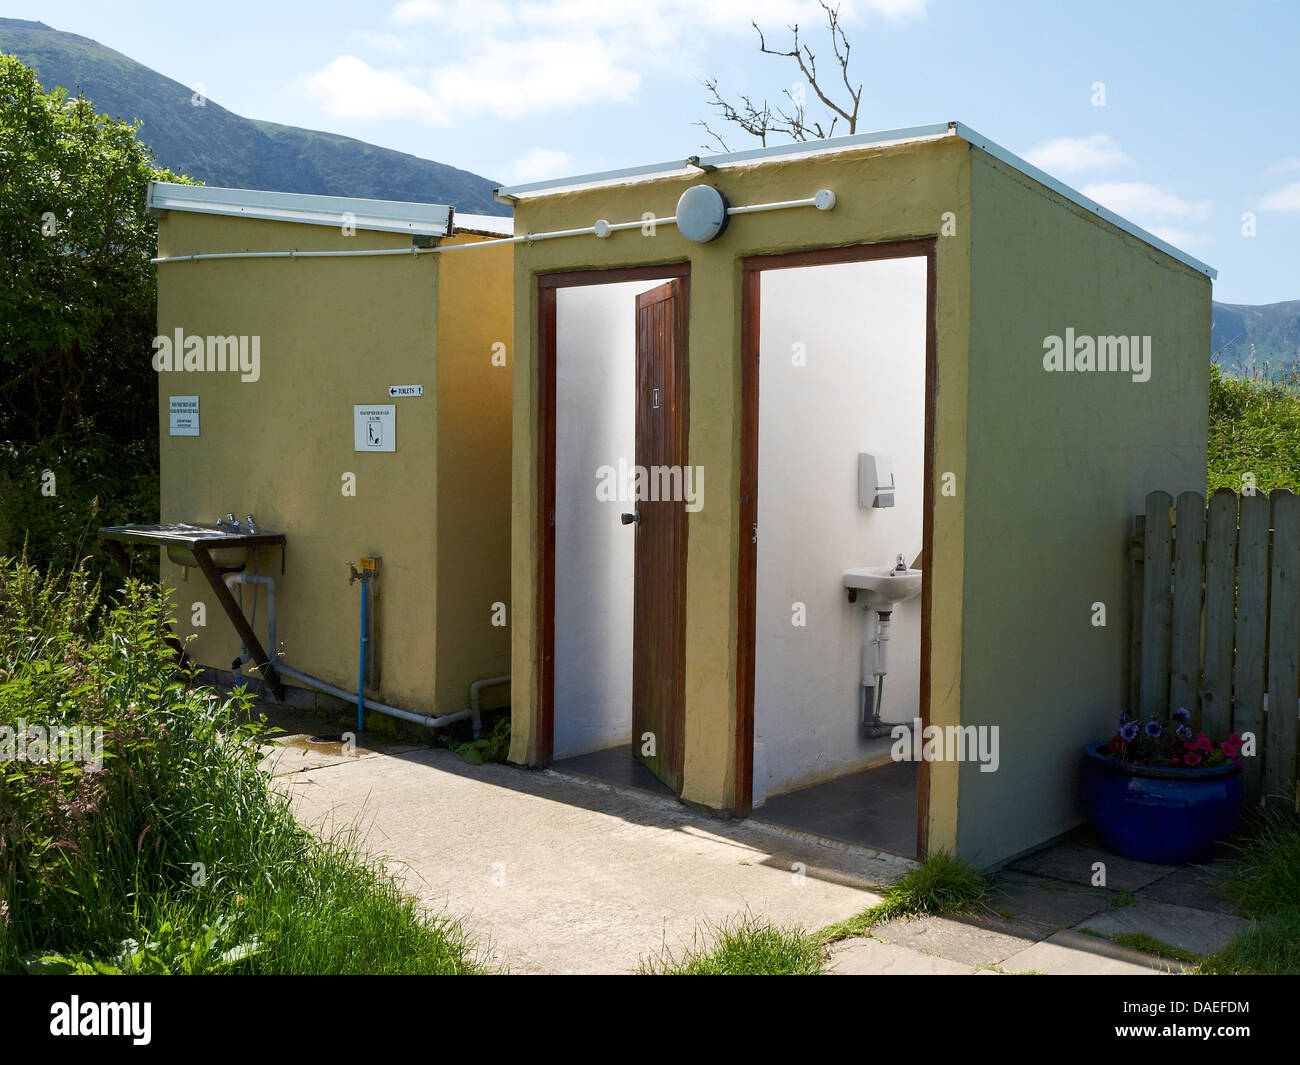 Camping toilet -Fotos und -Bildmaterial in hoher Auflösung – Alamy